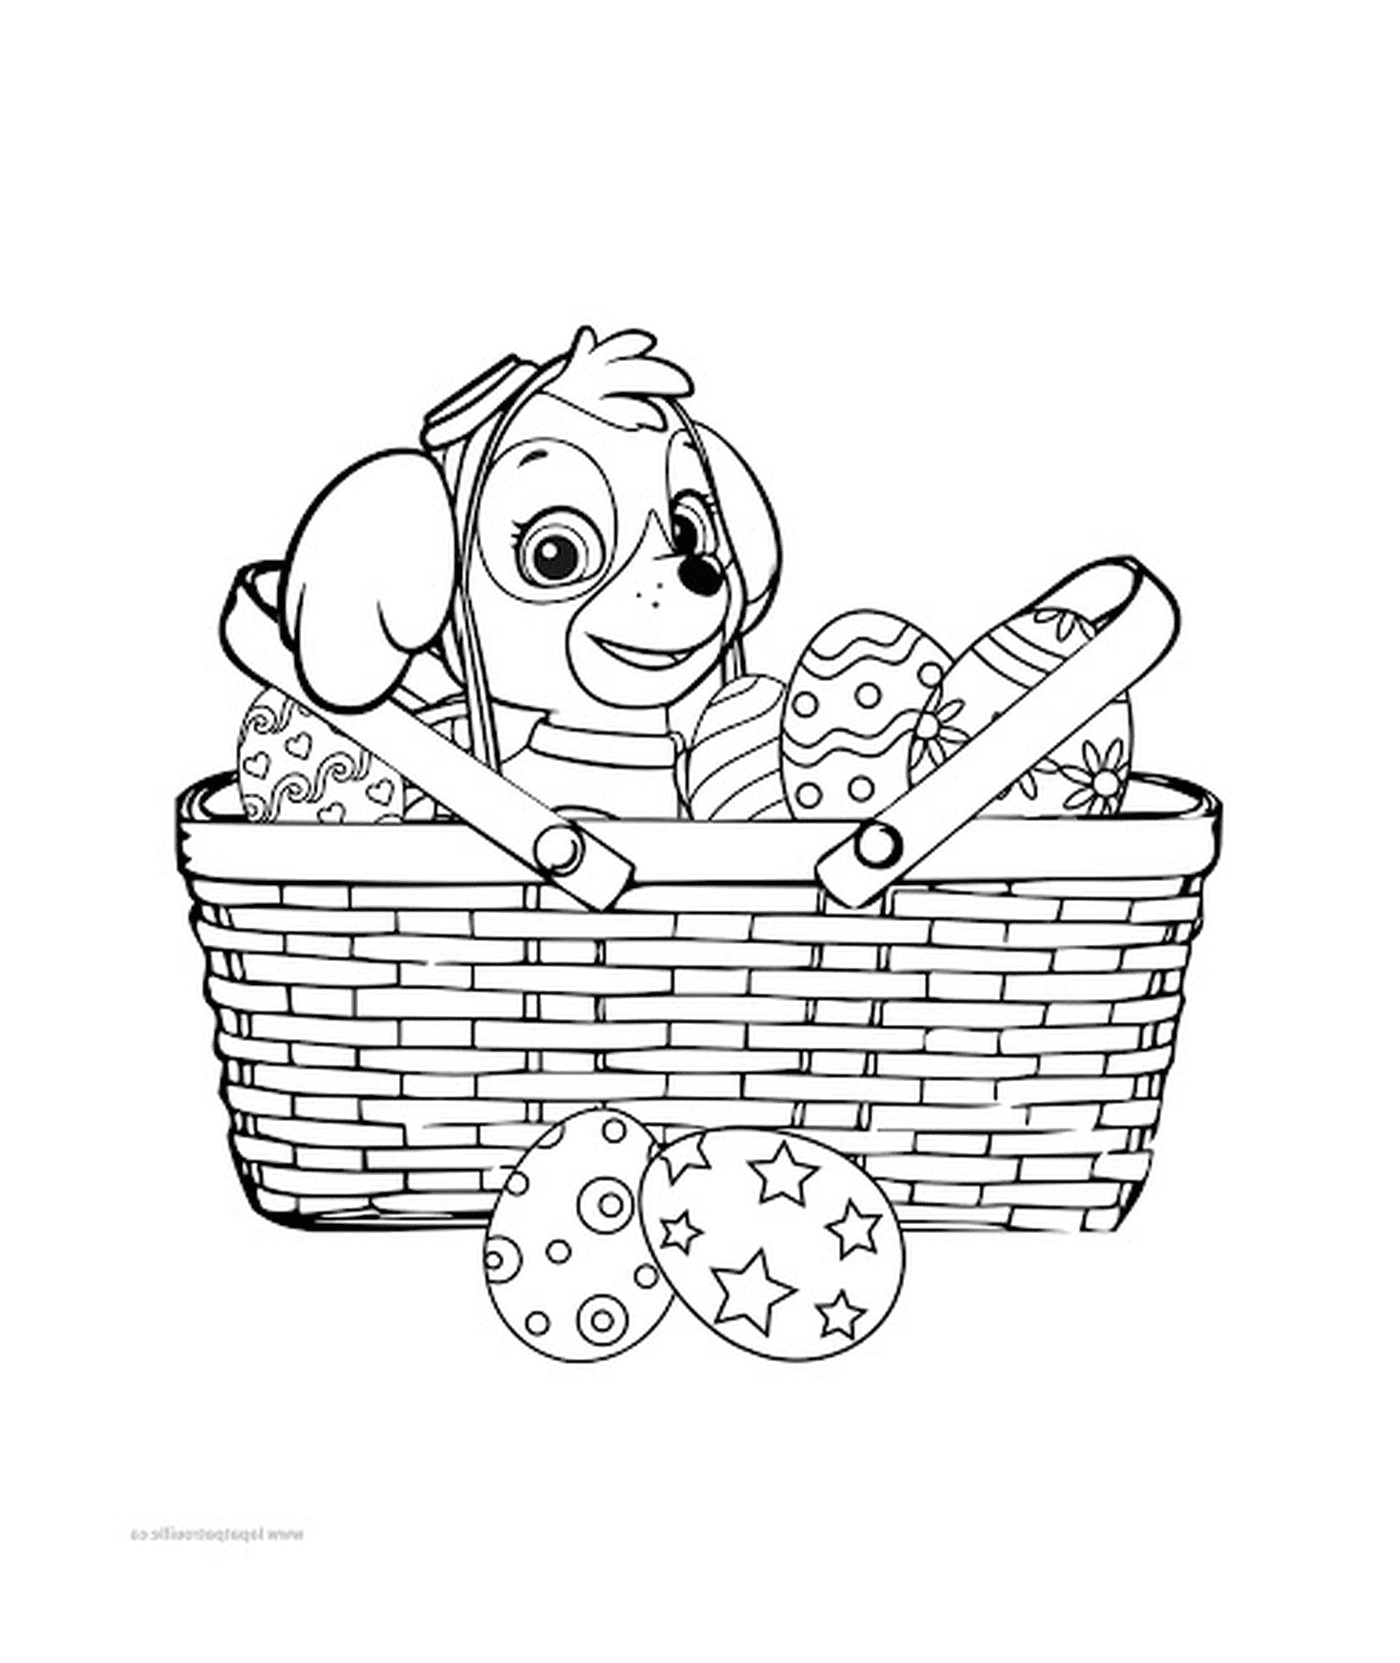  Stella in a basket of eggs 